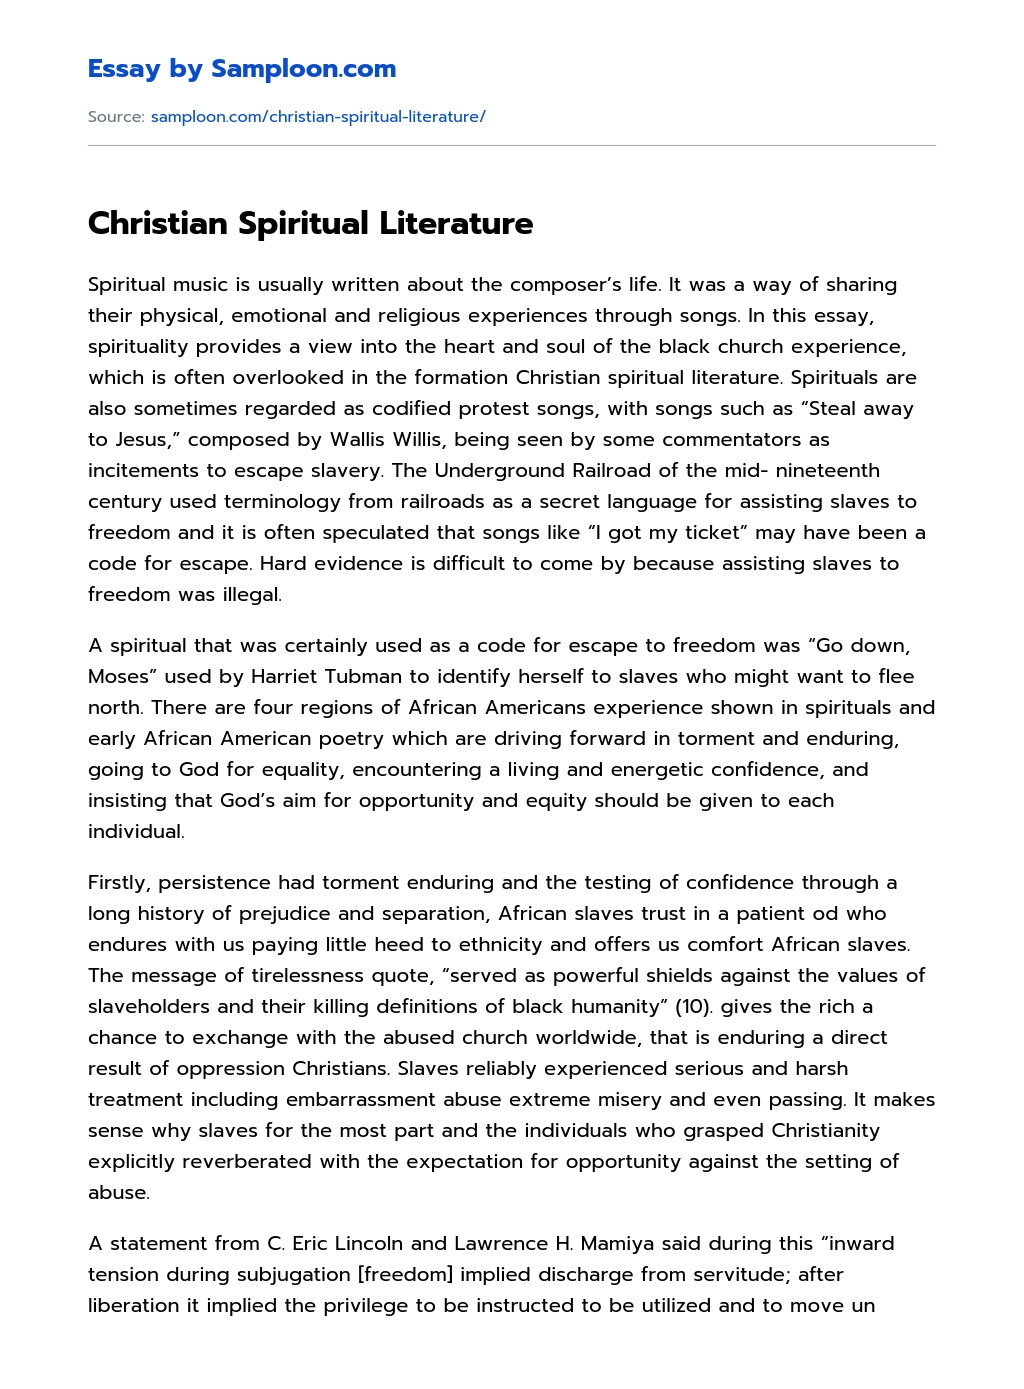 Christian Spiritual Literature essay